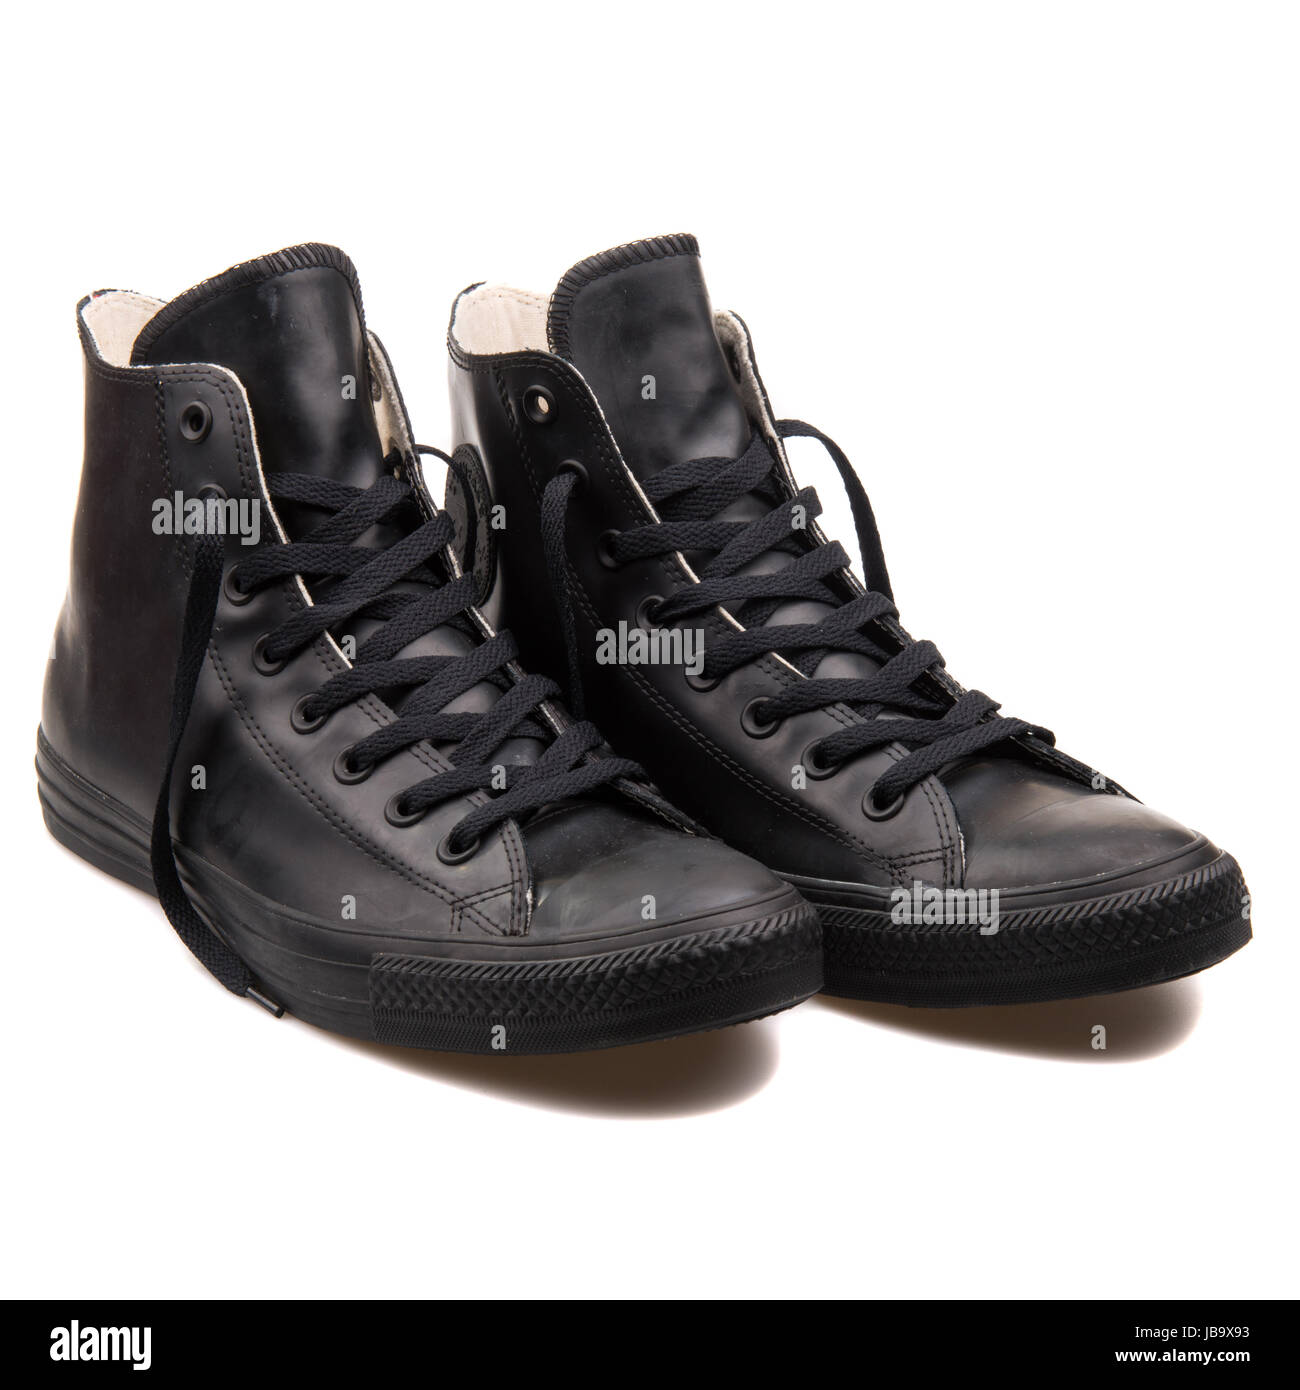 Converse Chuck Taylor All Star Hi Black Unisex Shoes - 144740C Stock Photo  - Alamy